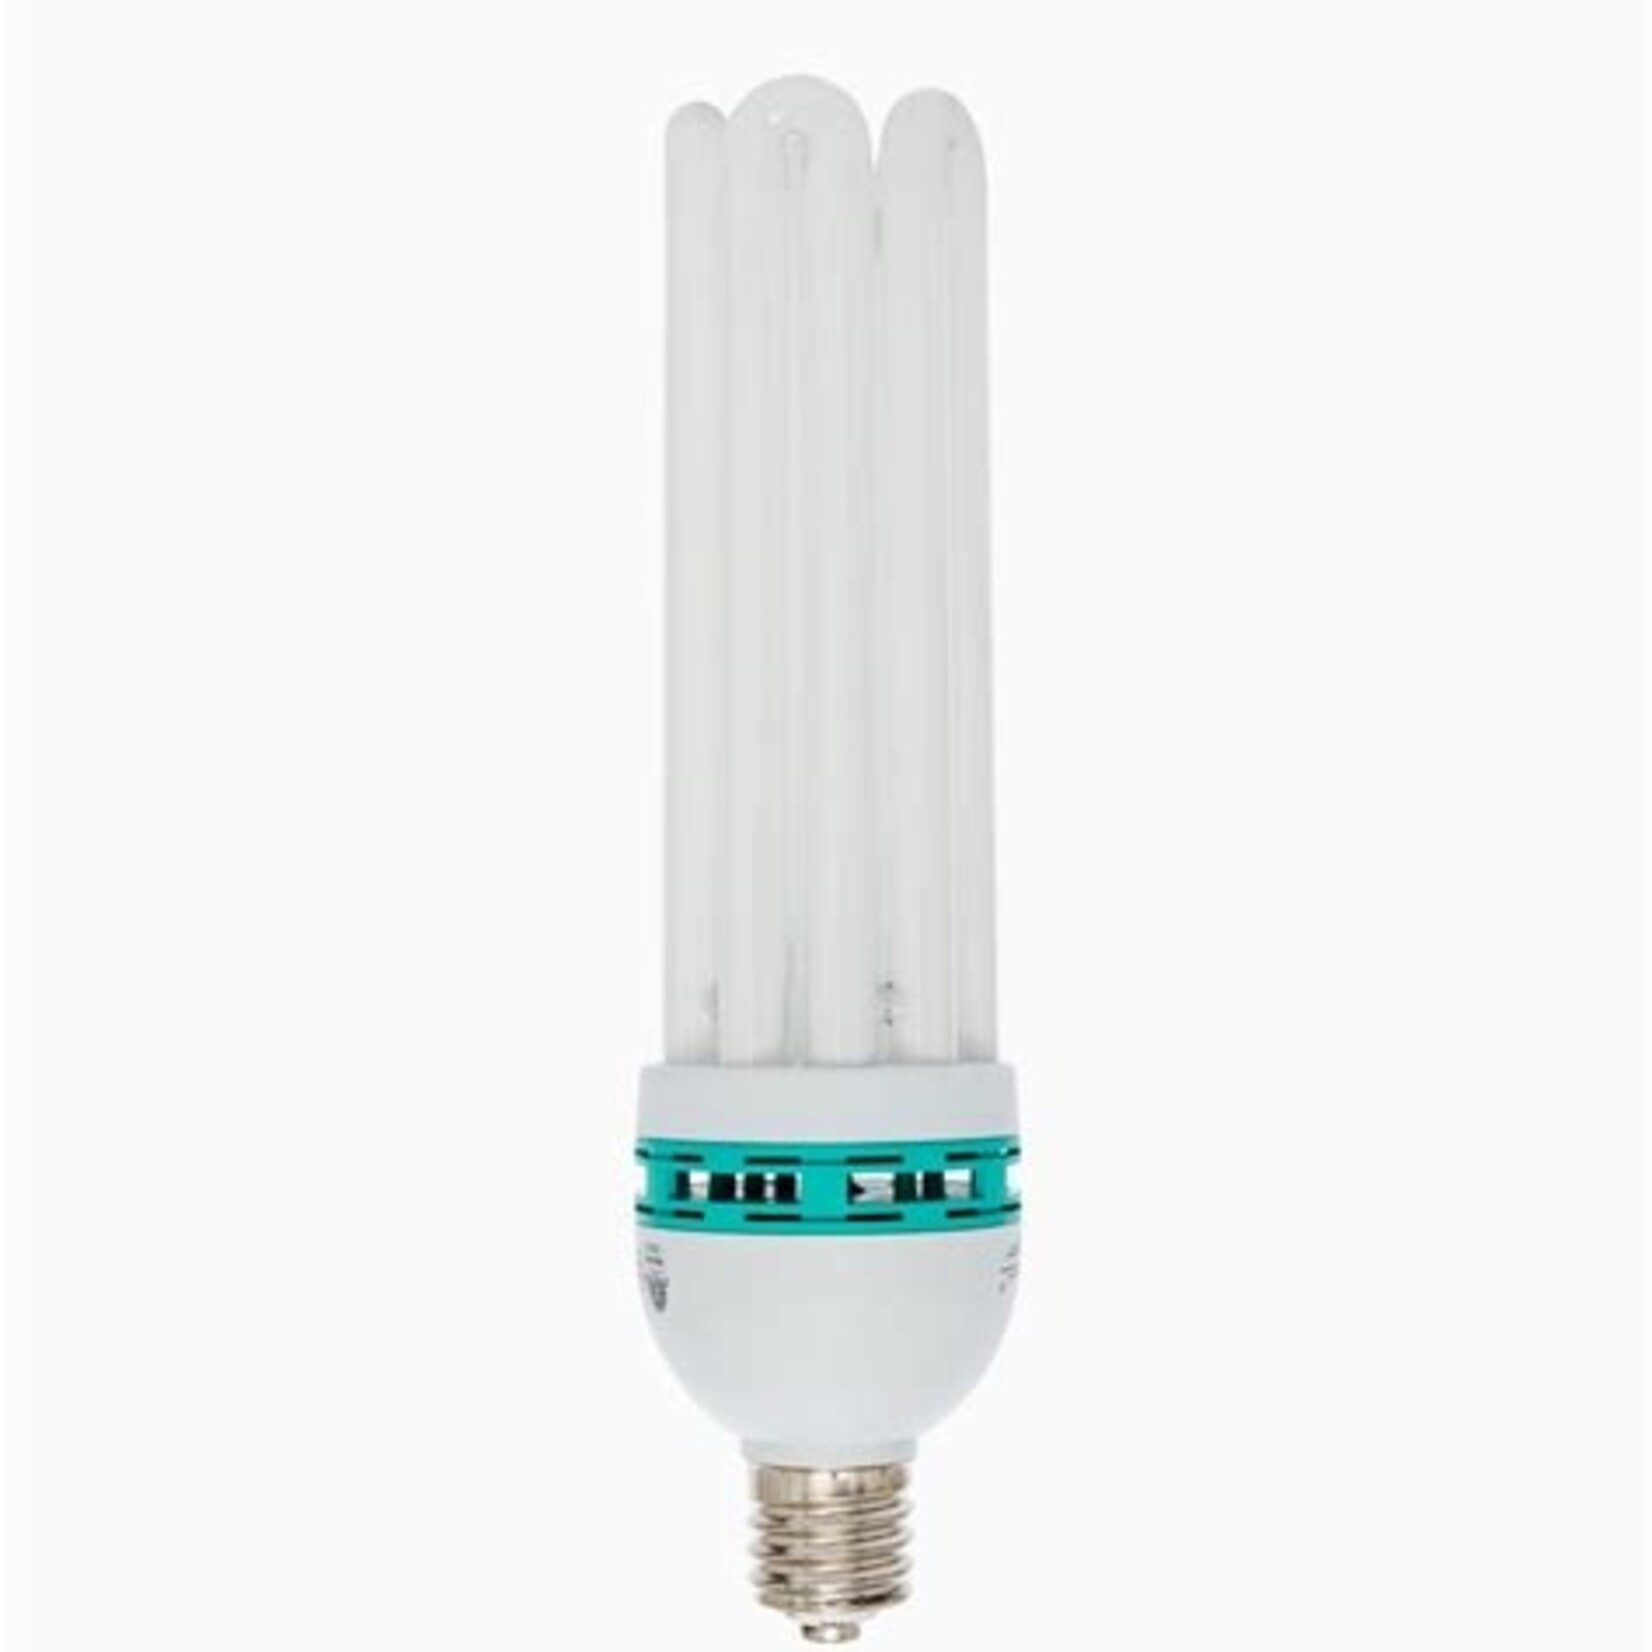 Hydrofarm 125 W CFL Compact Fluorescent Bulb - Warm 2700K